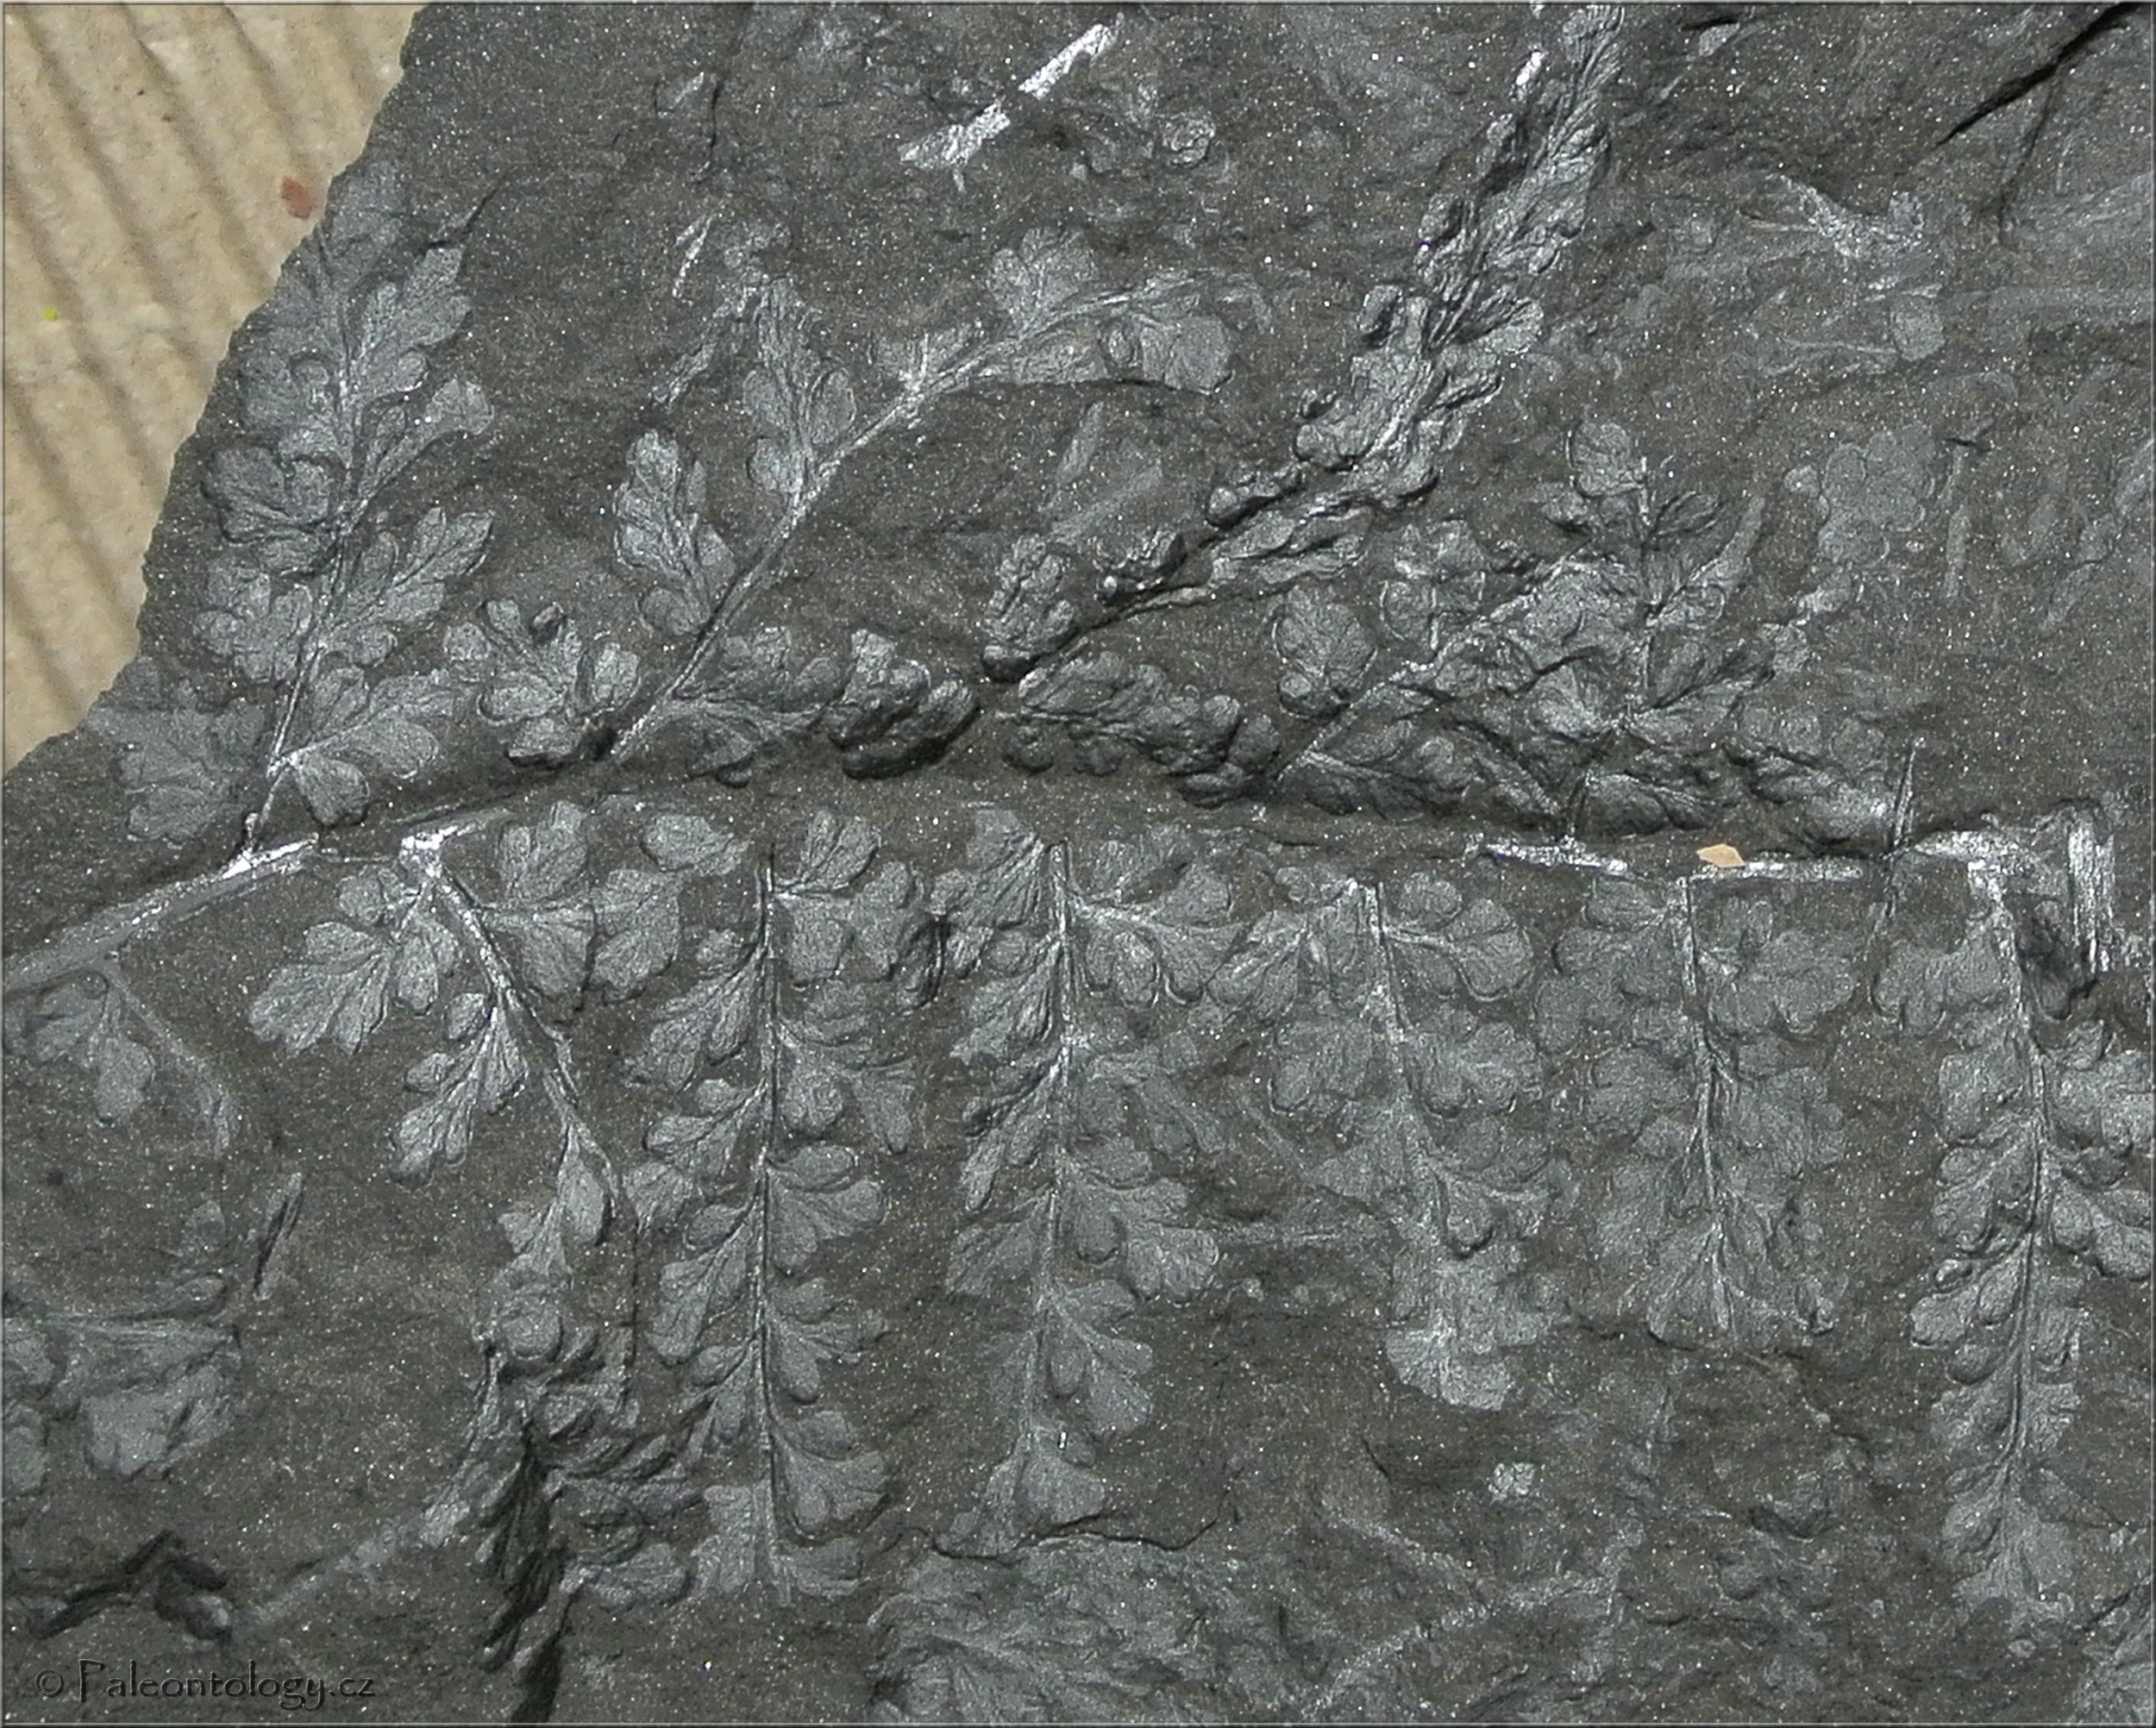 Lyginopteris bermudensiformis f.geinitzi, Staříč - Důl Staříč II, (f2)